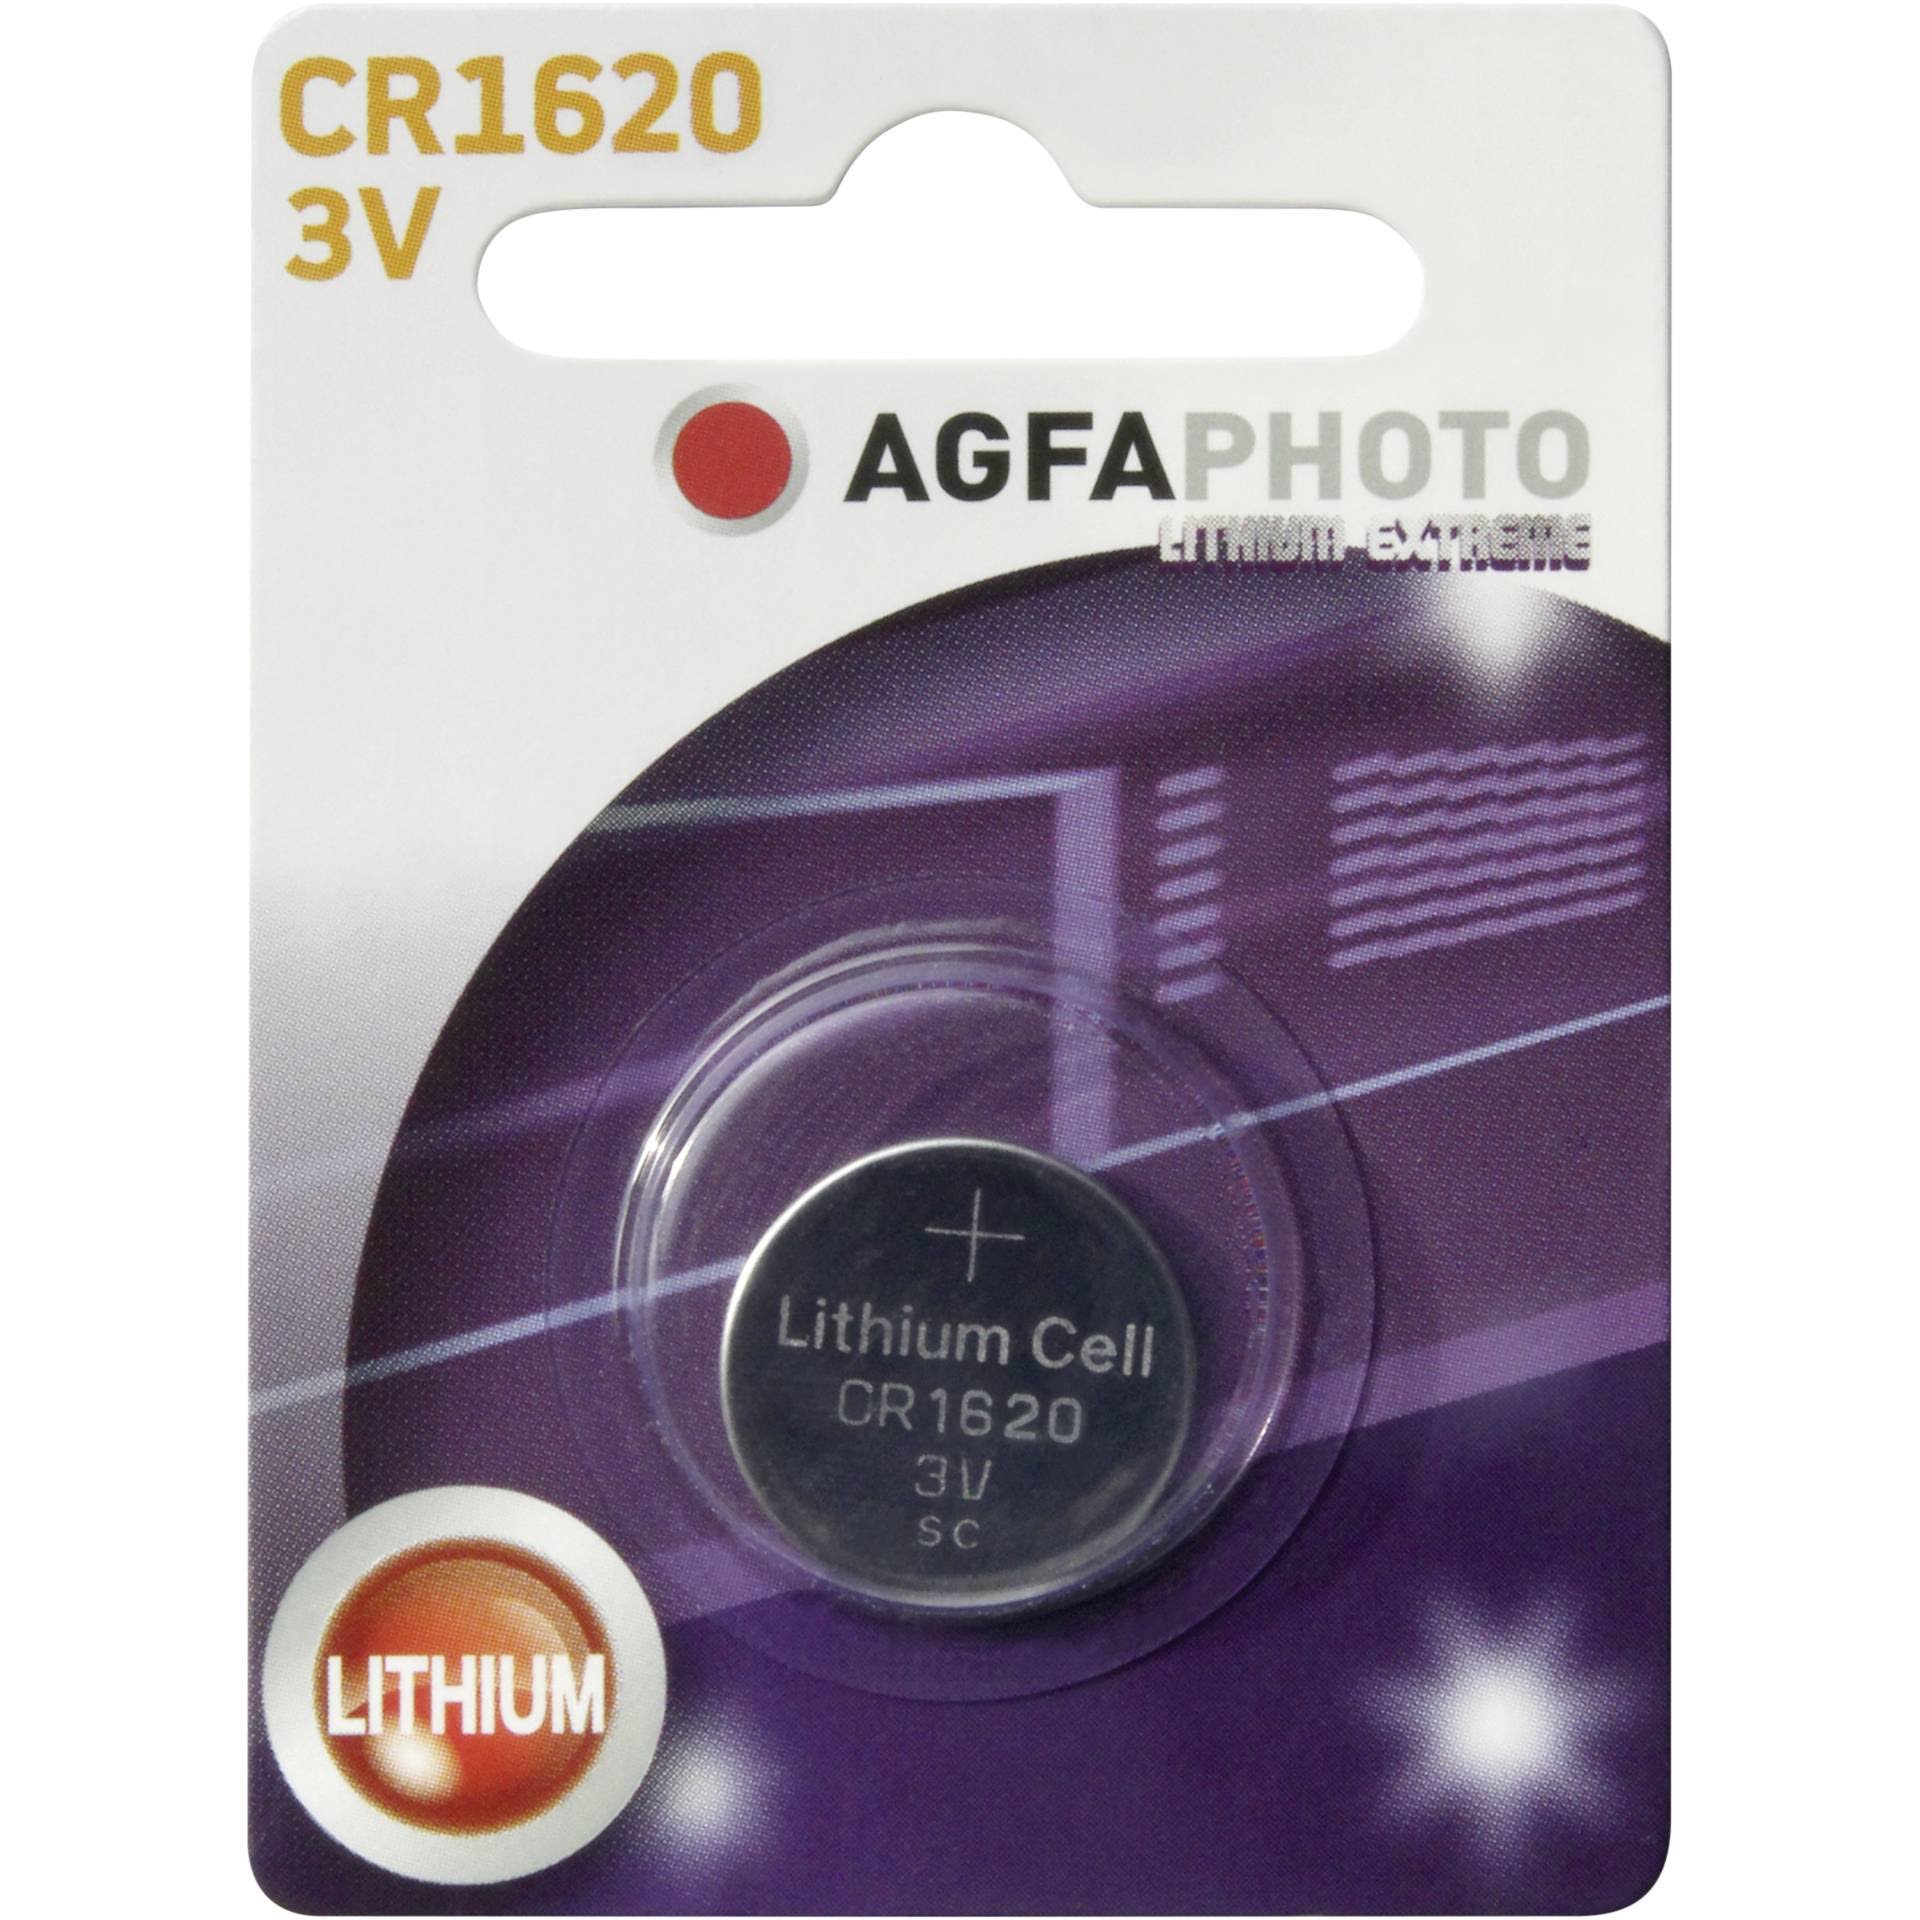 AgfaPhoto Lithium Coin CR1620 Battery - 3V